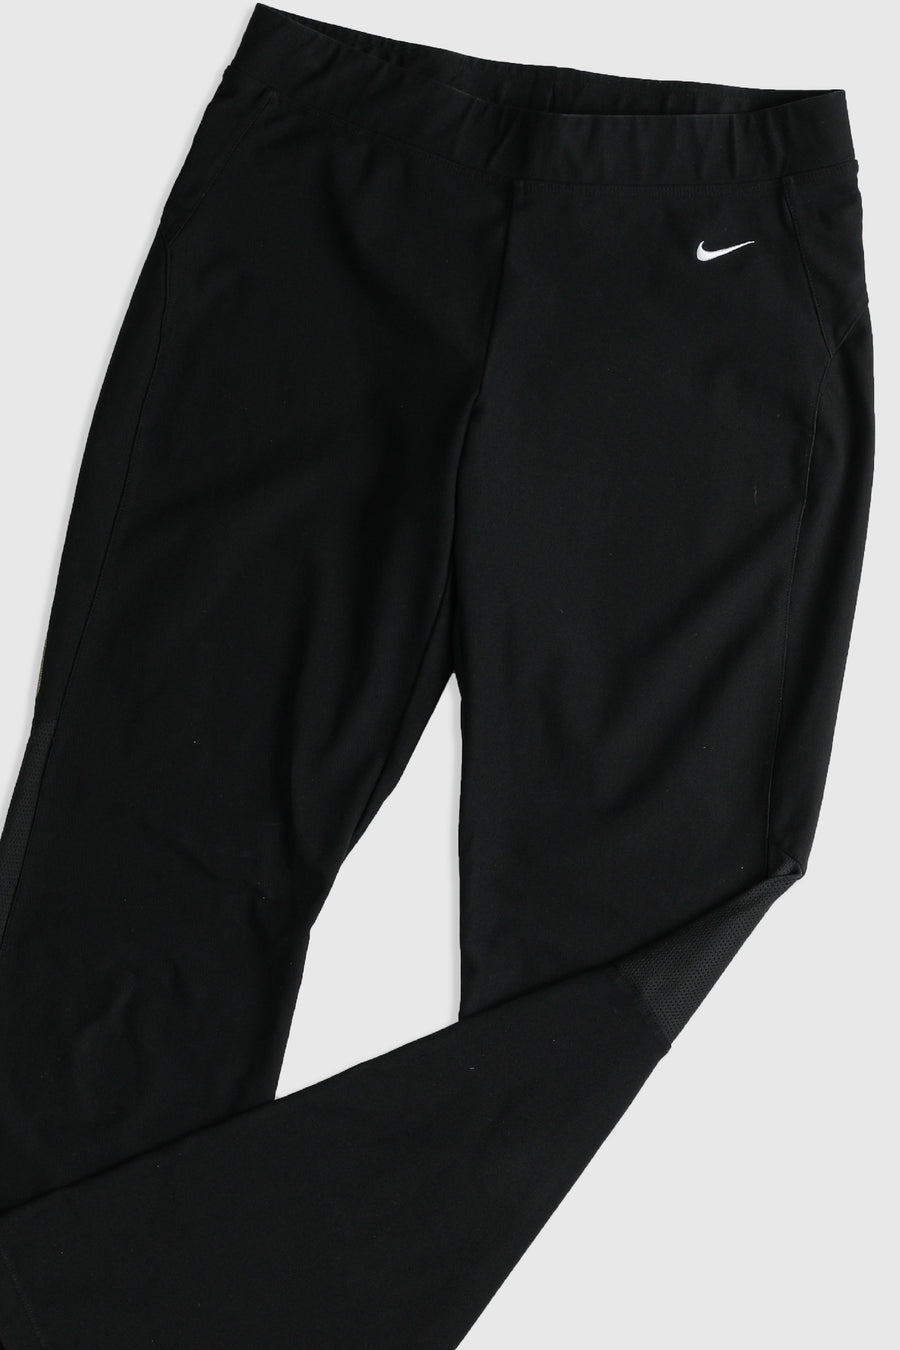 Vintage Nike Pants - XS